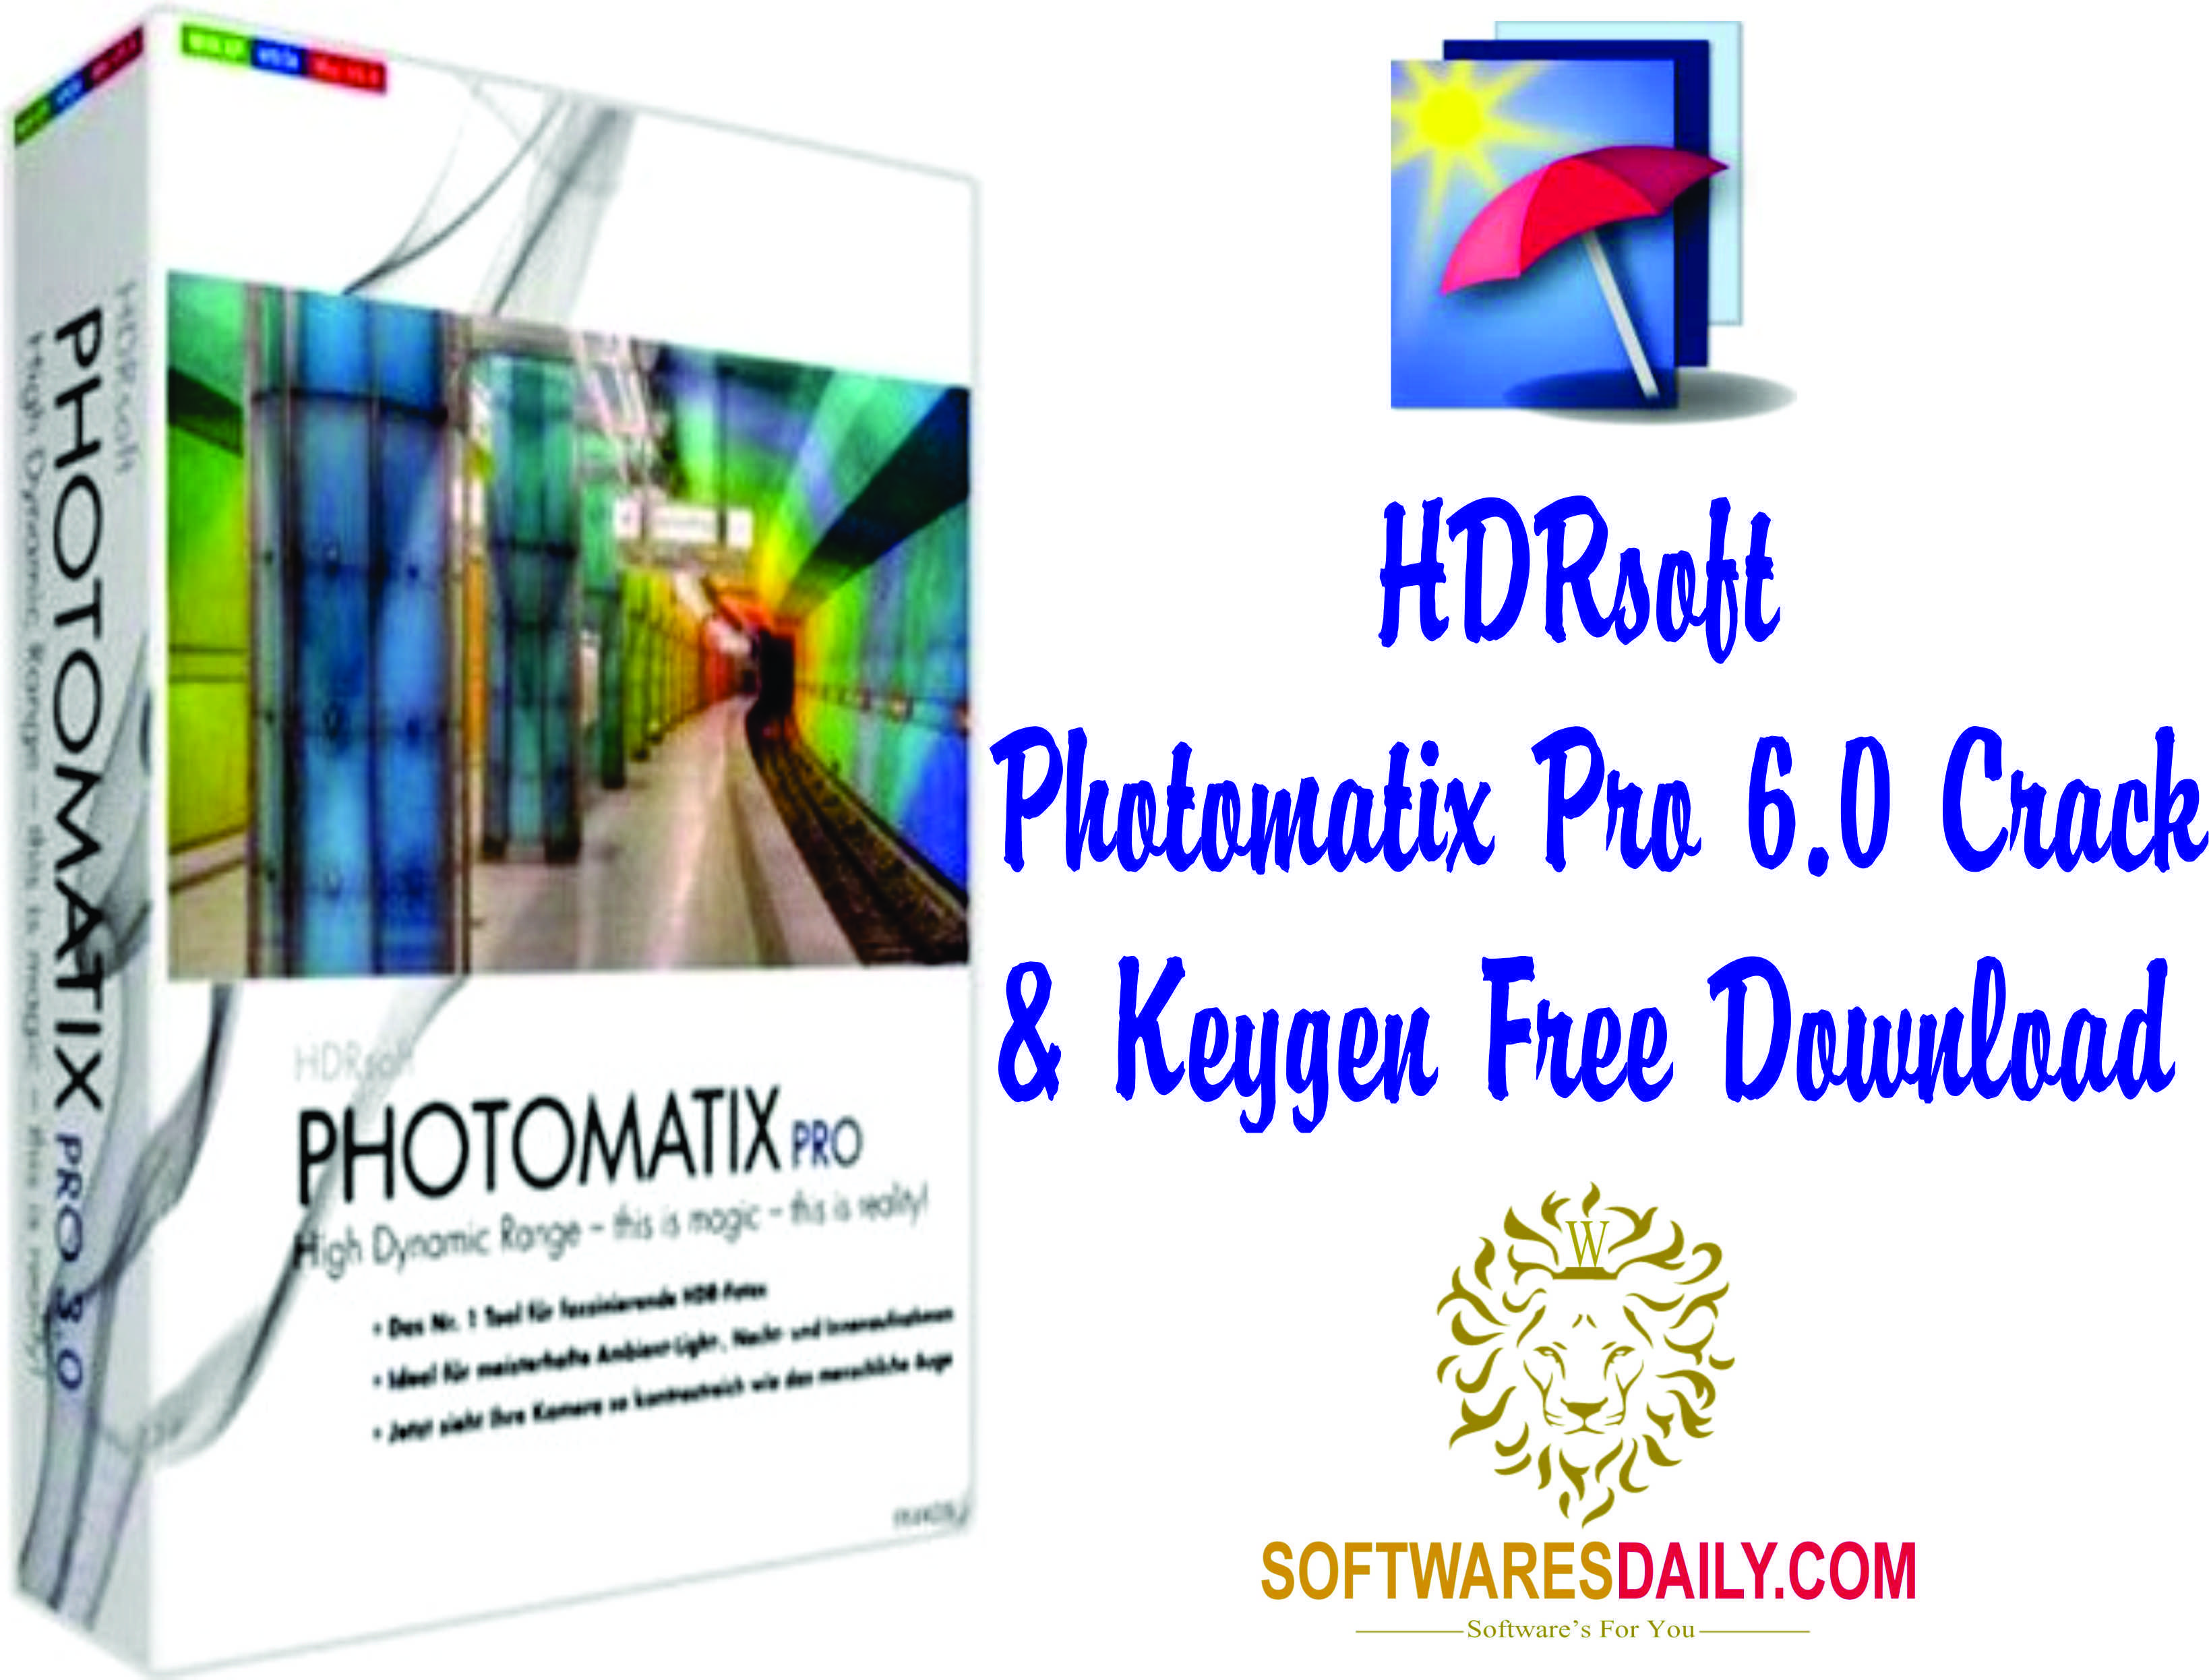 photomatix pro 6 price